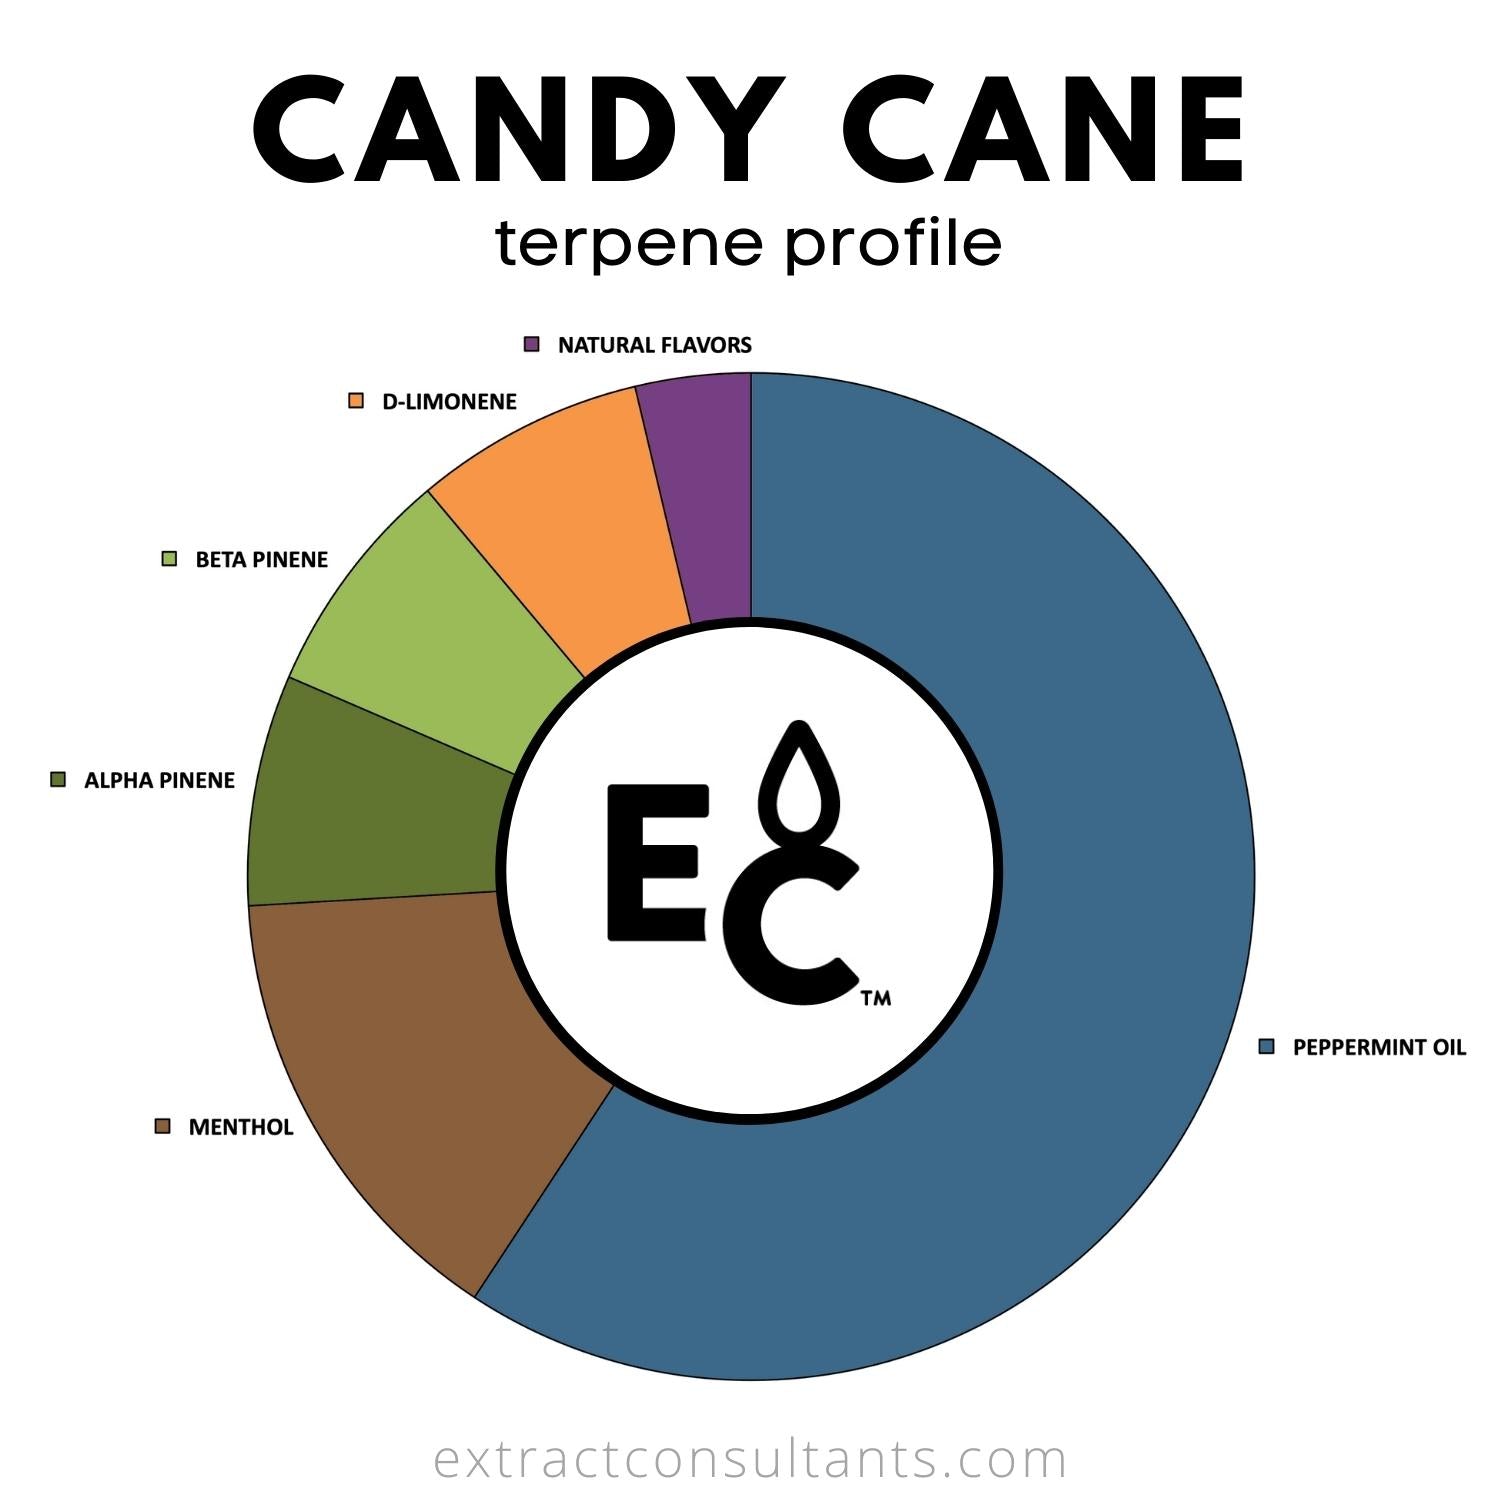 Candy Cane Terpene profile chart